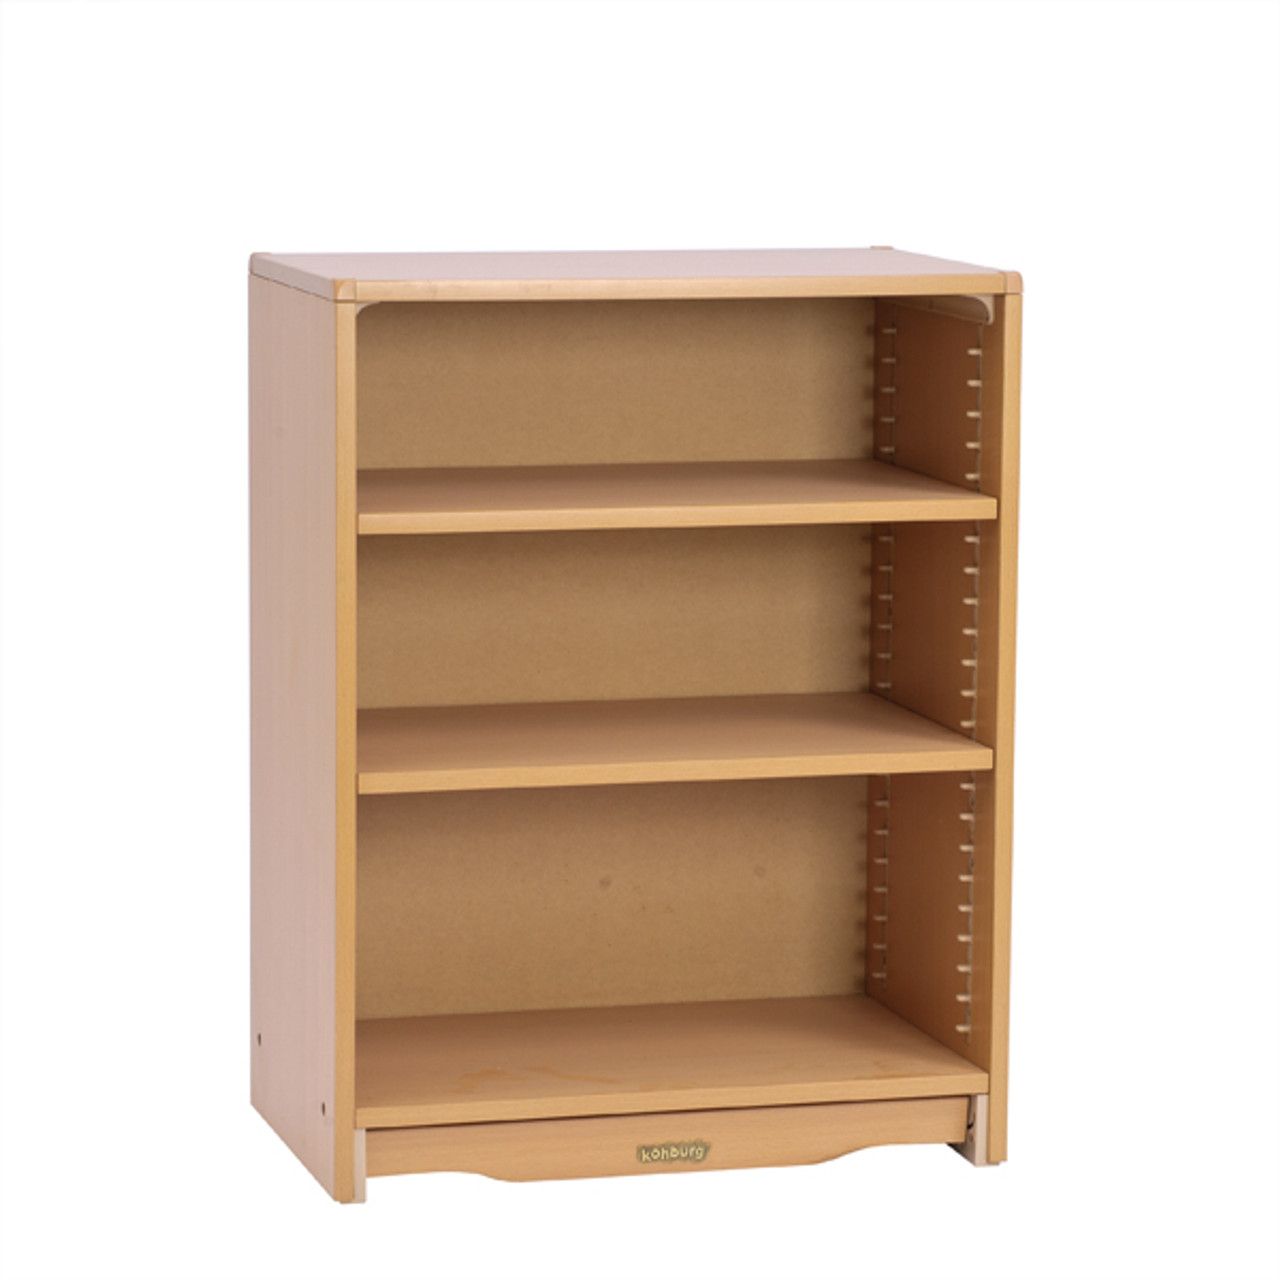 Golden Oak Adjustable Wood Shelf 12 D x 36 L